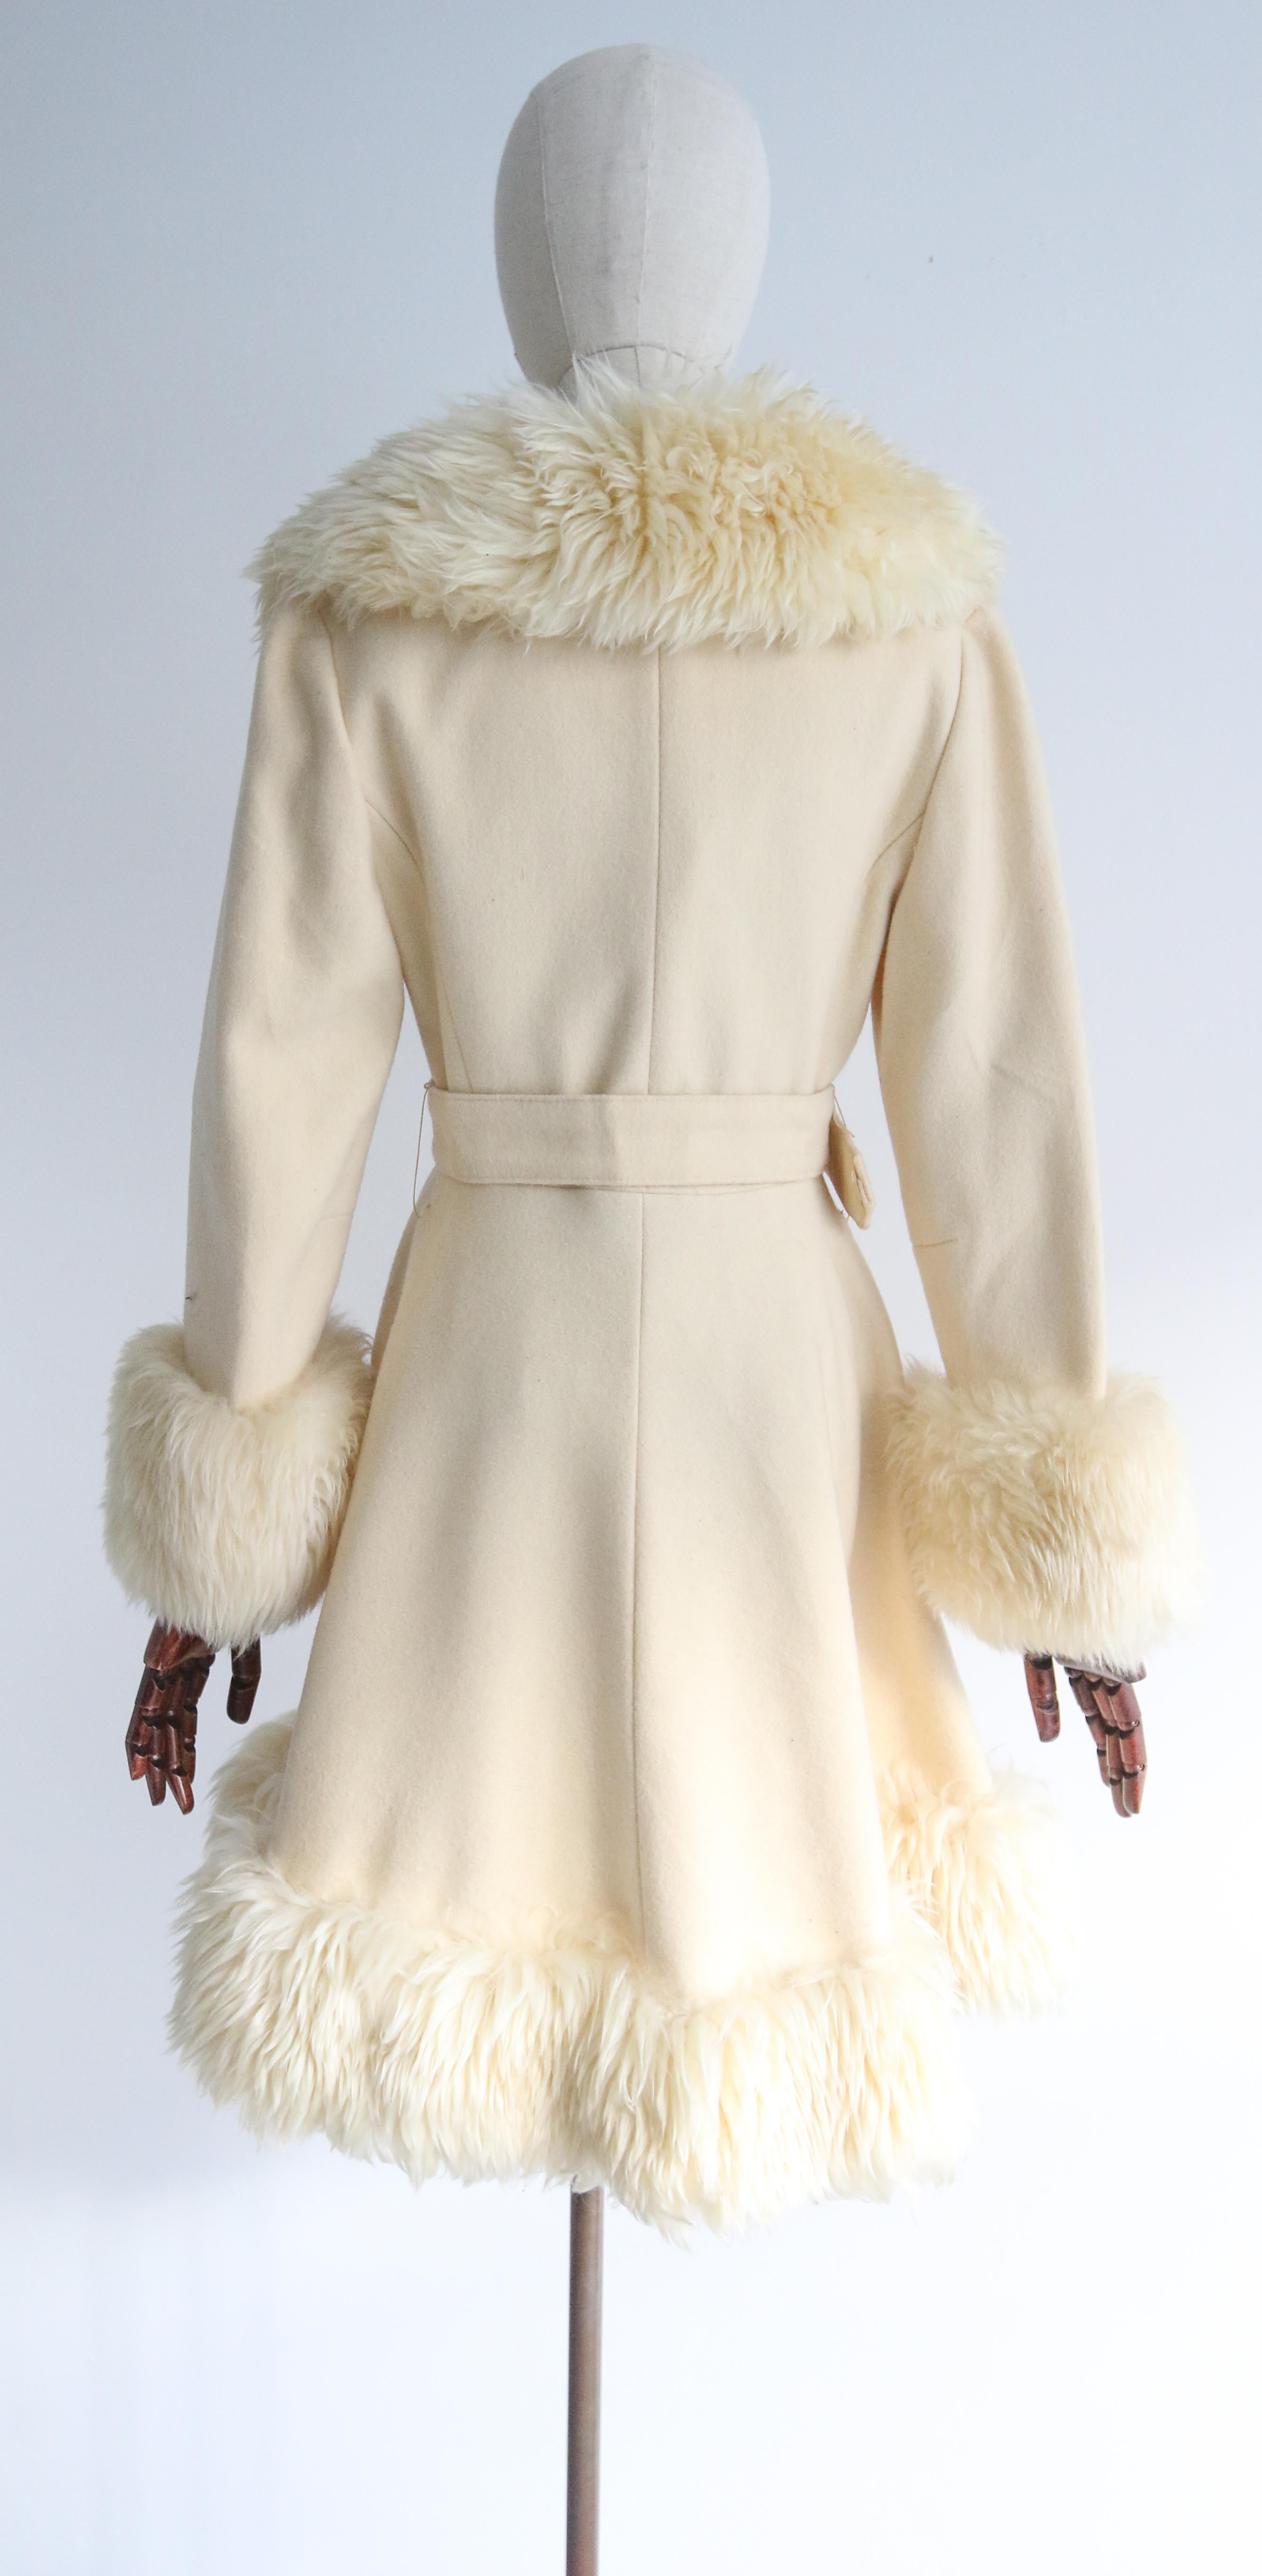  Vintage 1960's Cream Wool Coat UK 8 US 4 2